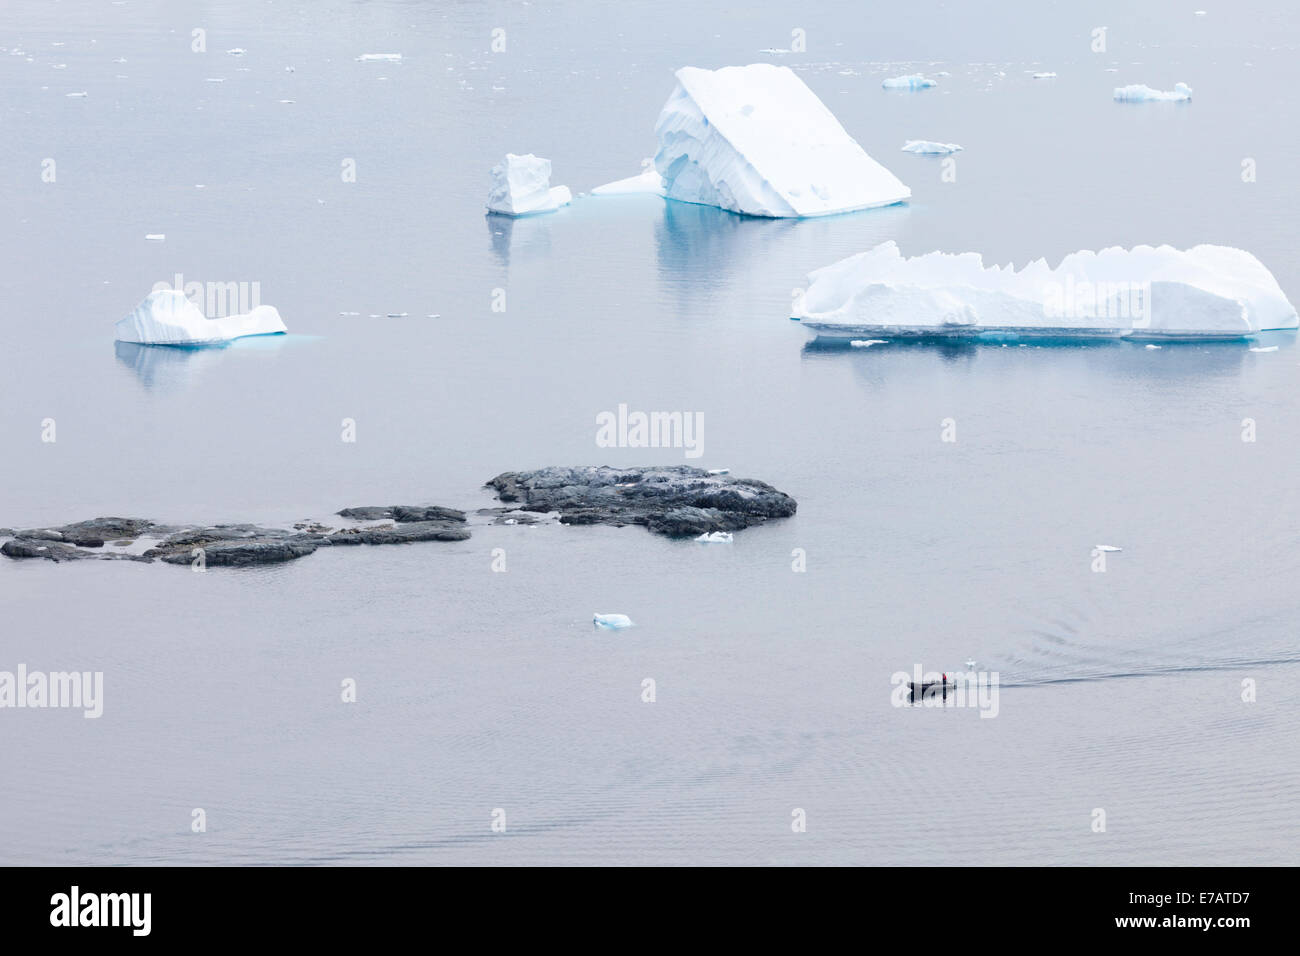 Icebergs, rocky islets and a rubber boat near Danco Island, Antarctica Stock Photo